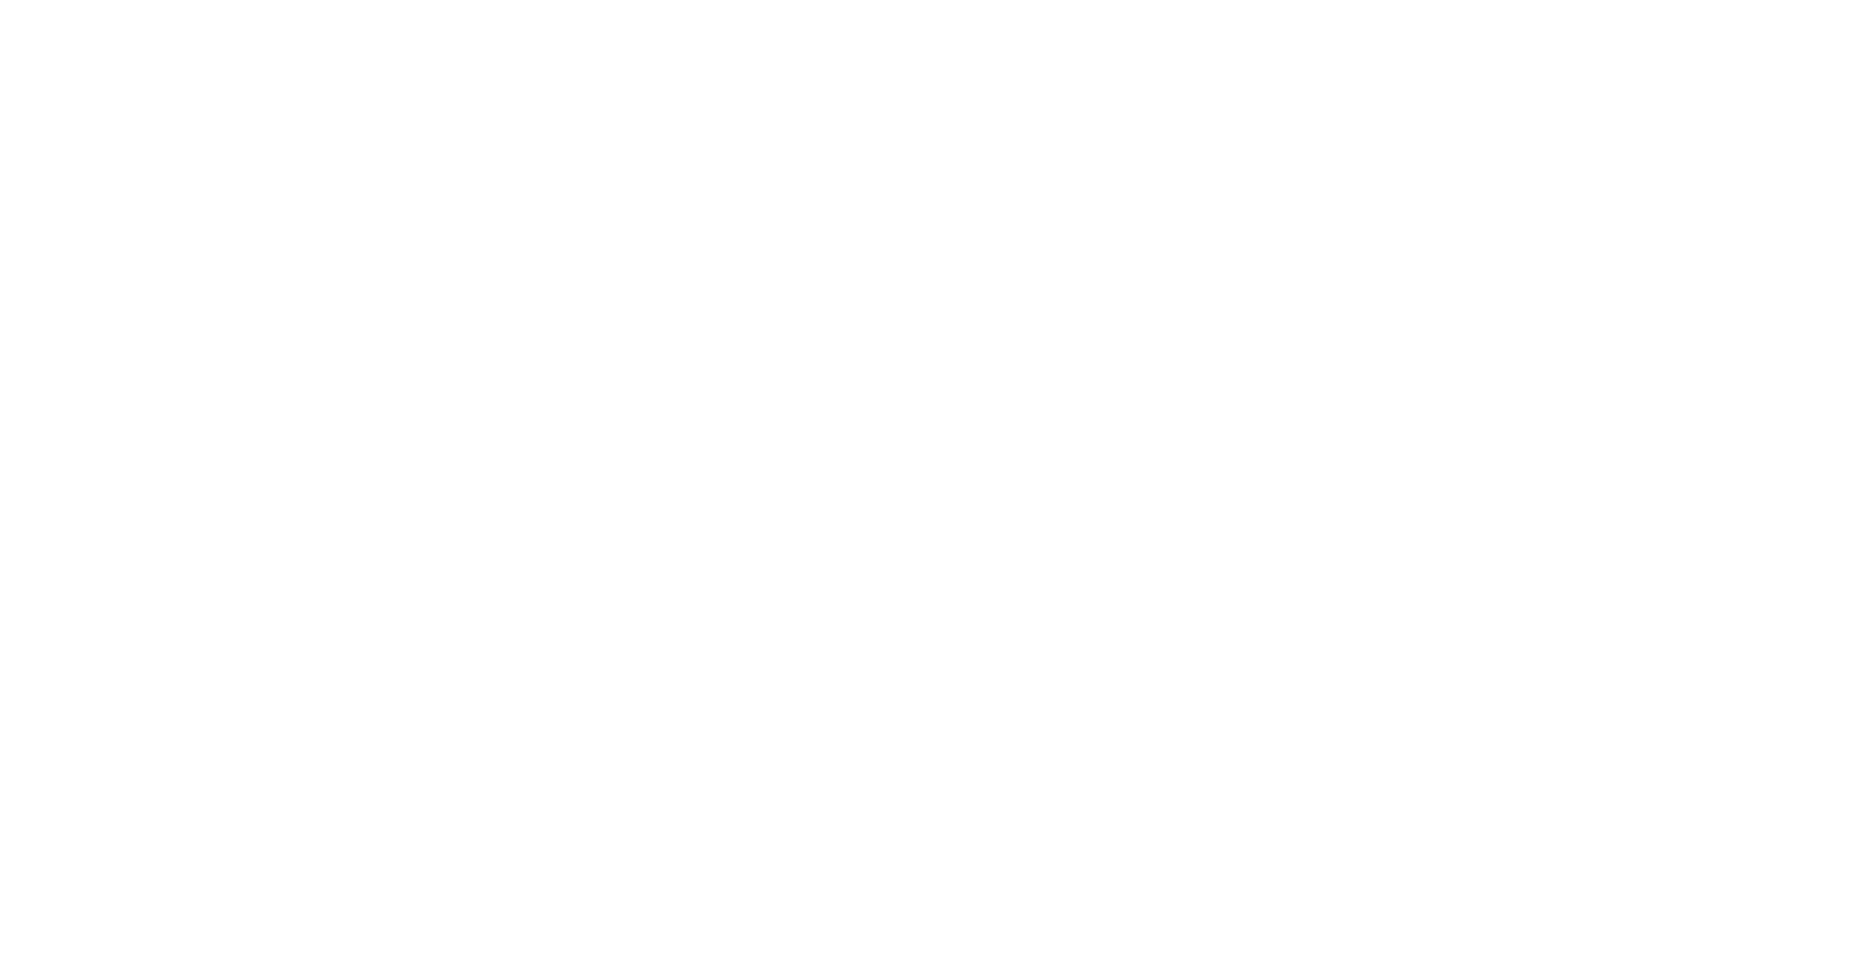 Operator Excellence Program